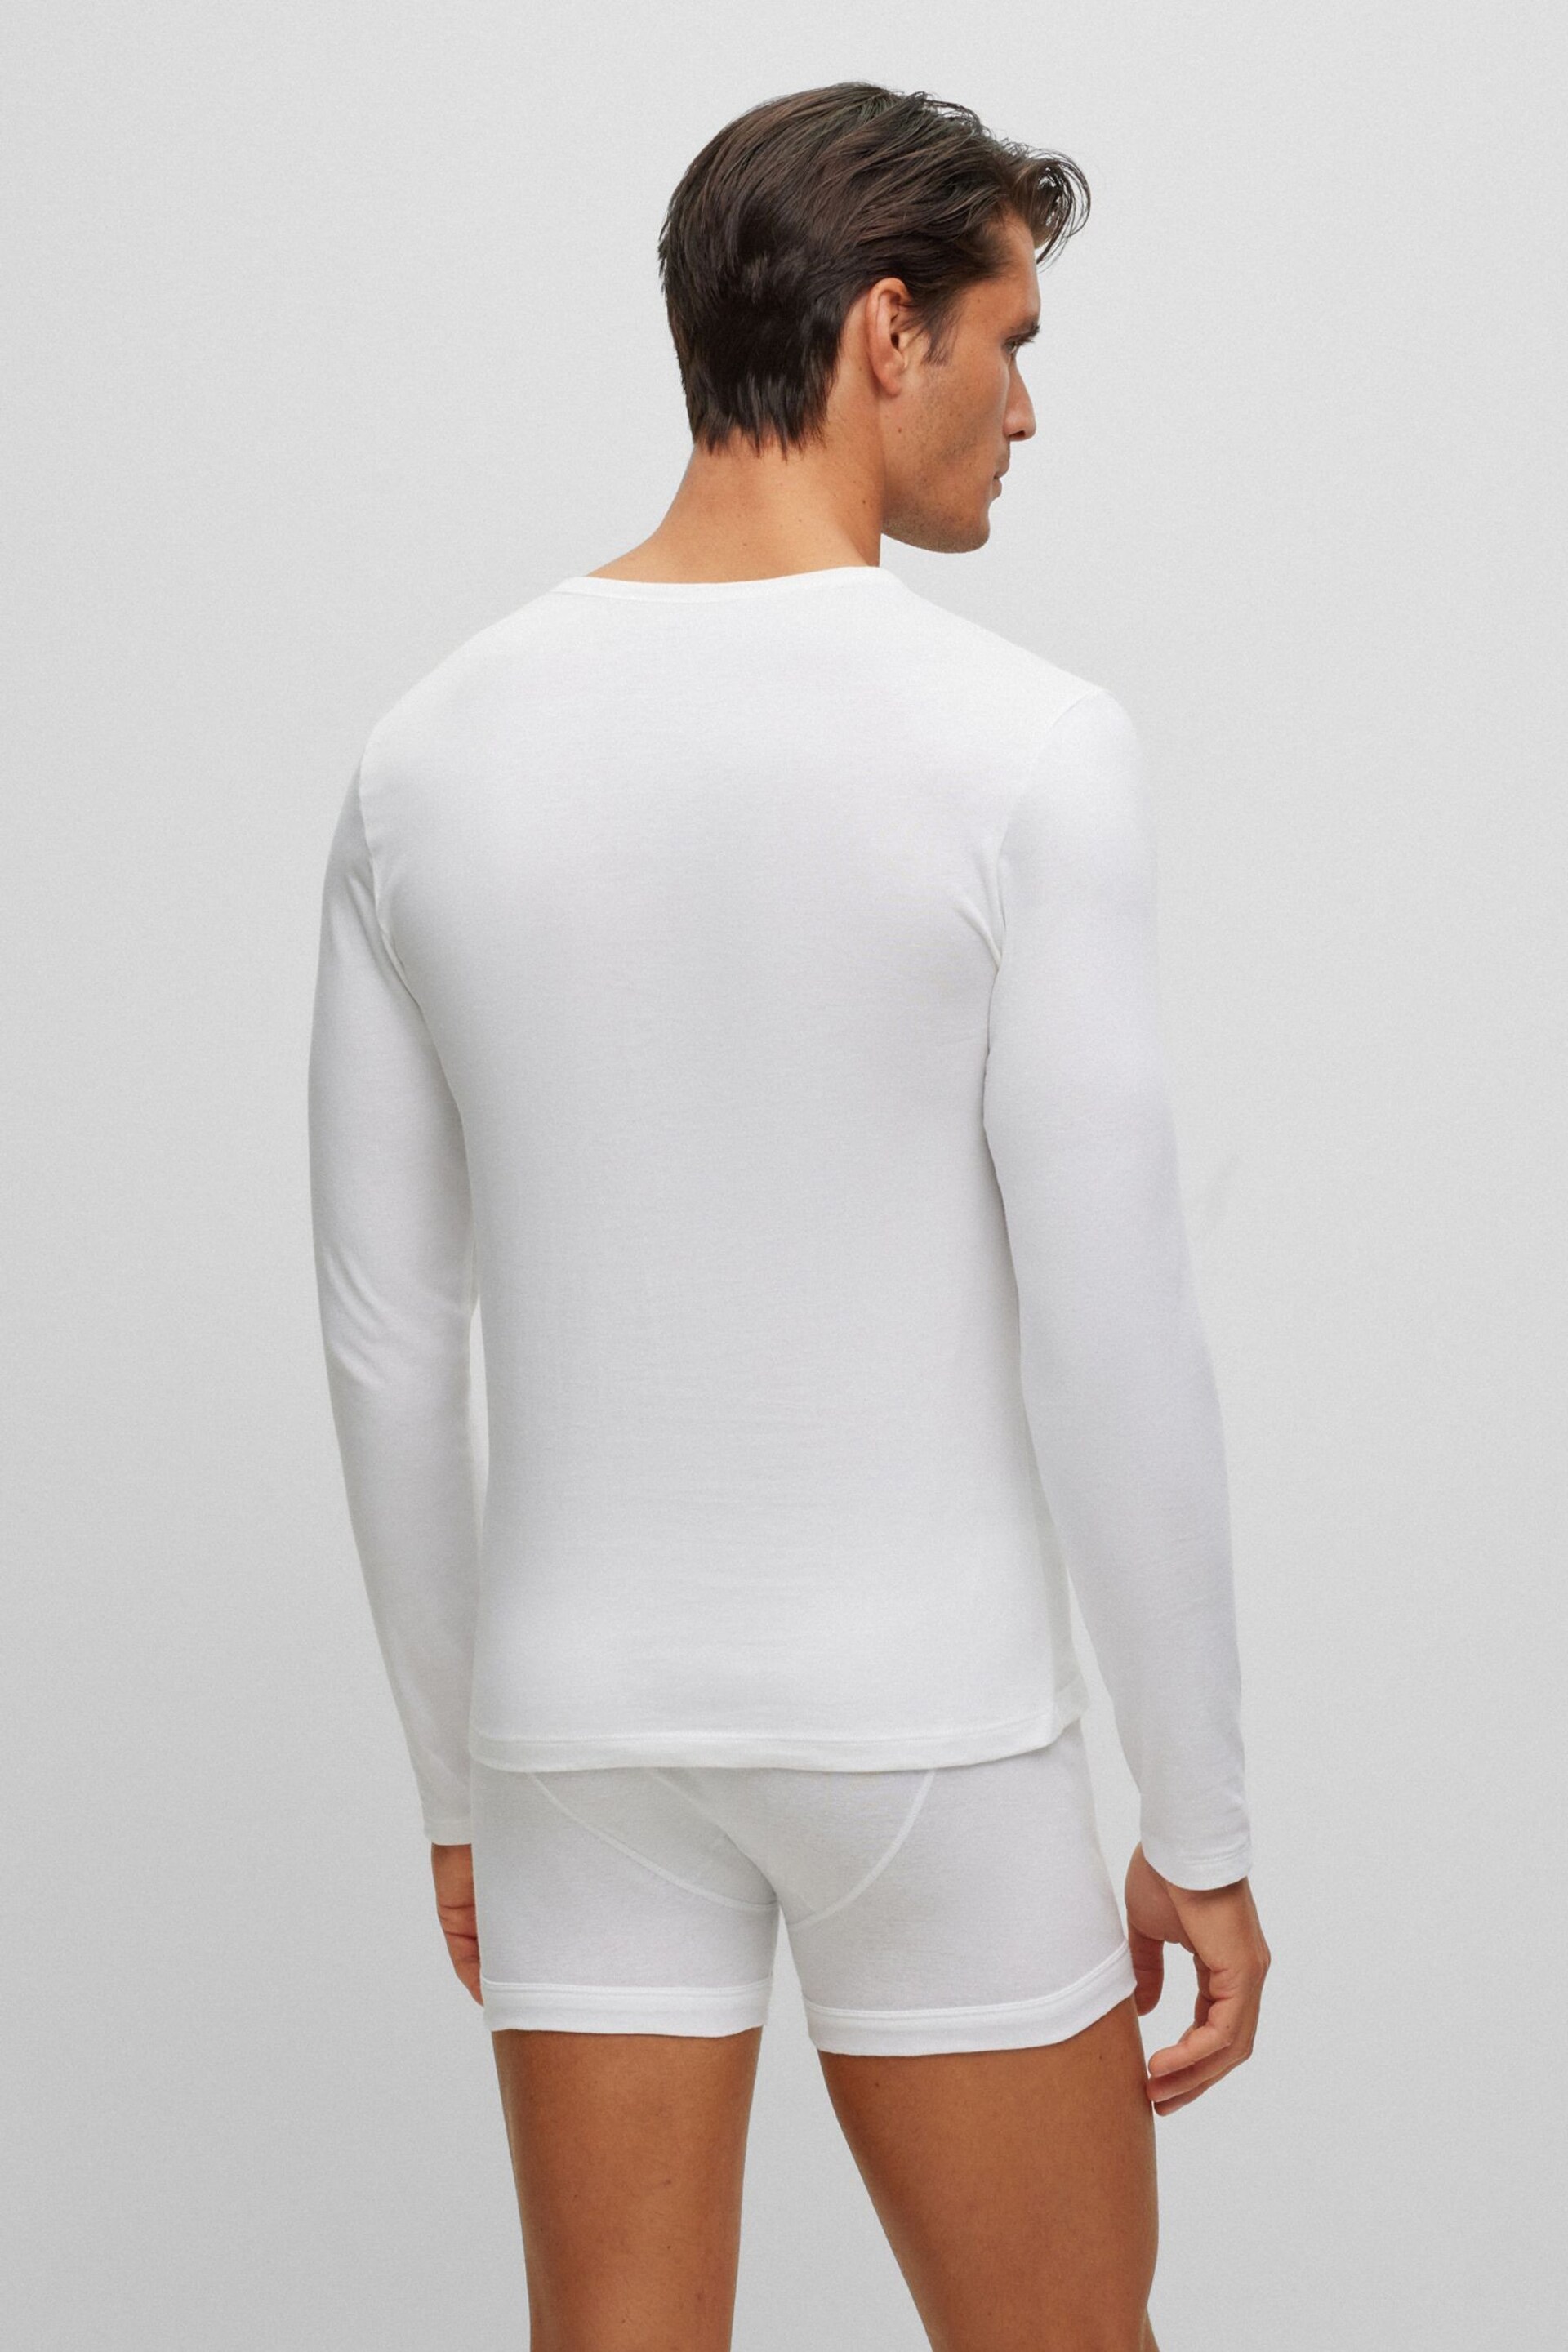 BOSS Black Long Sleeve T-Shirt 3 Pack - Image 8 of 8